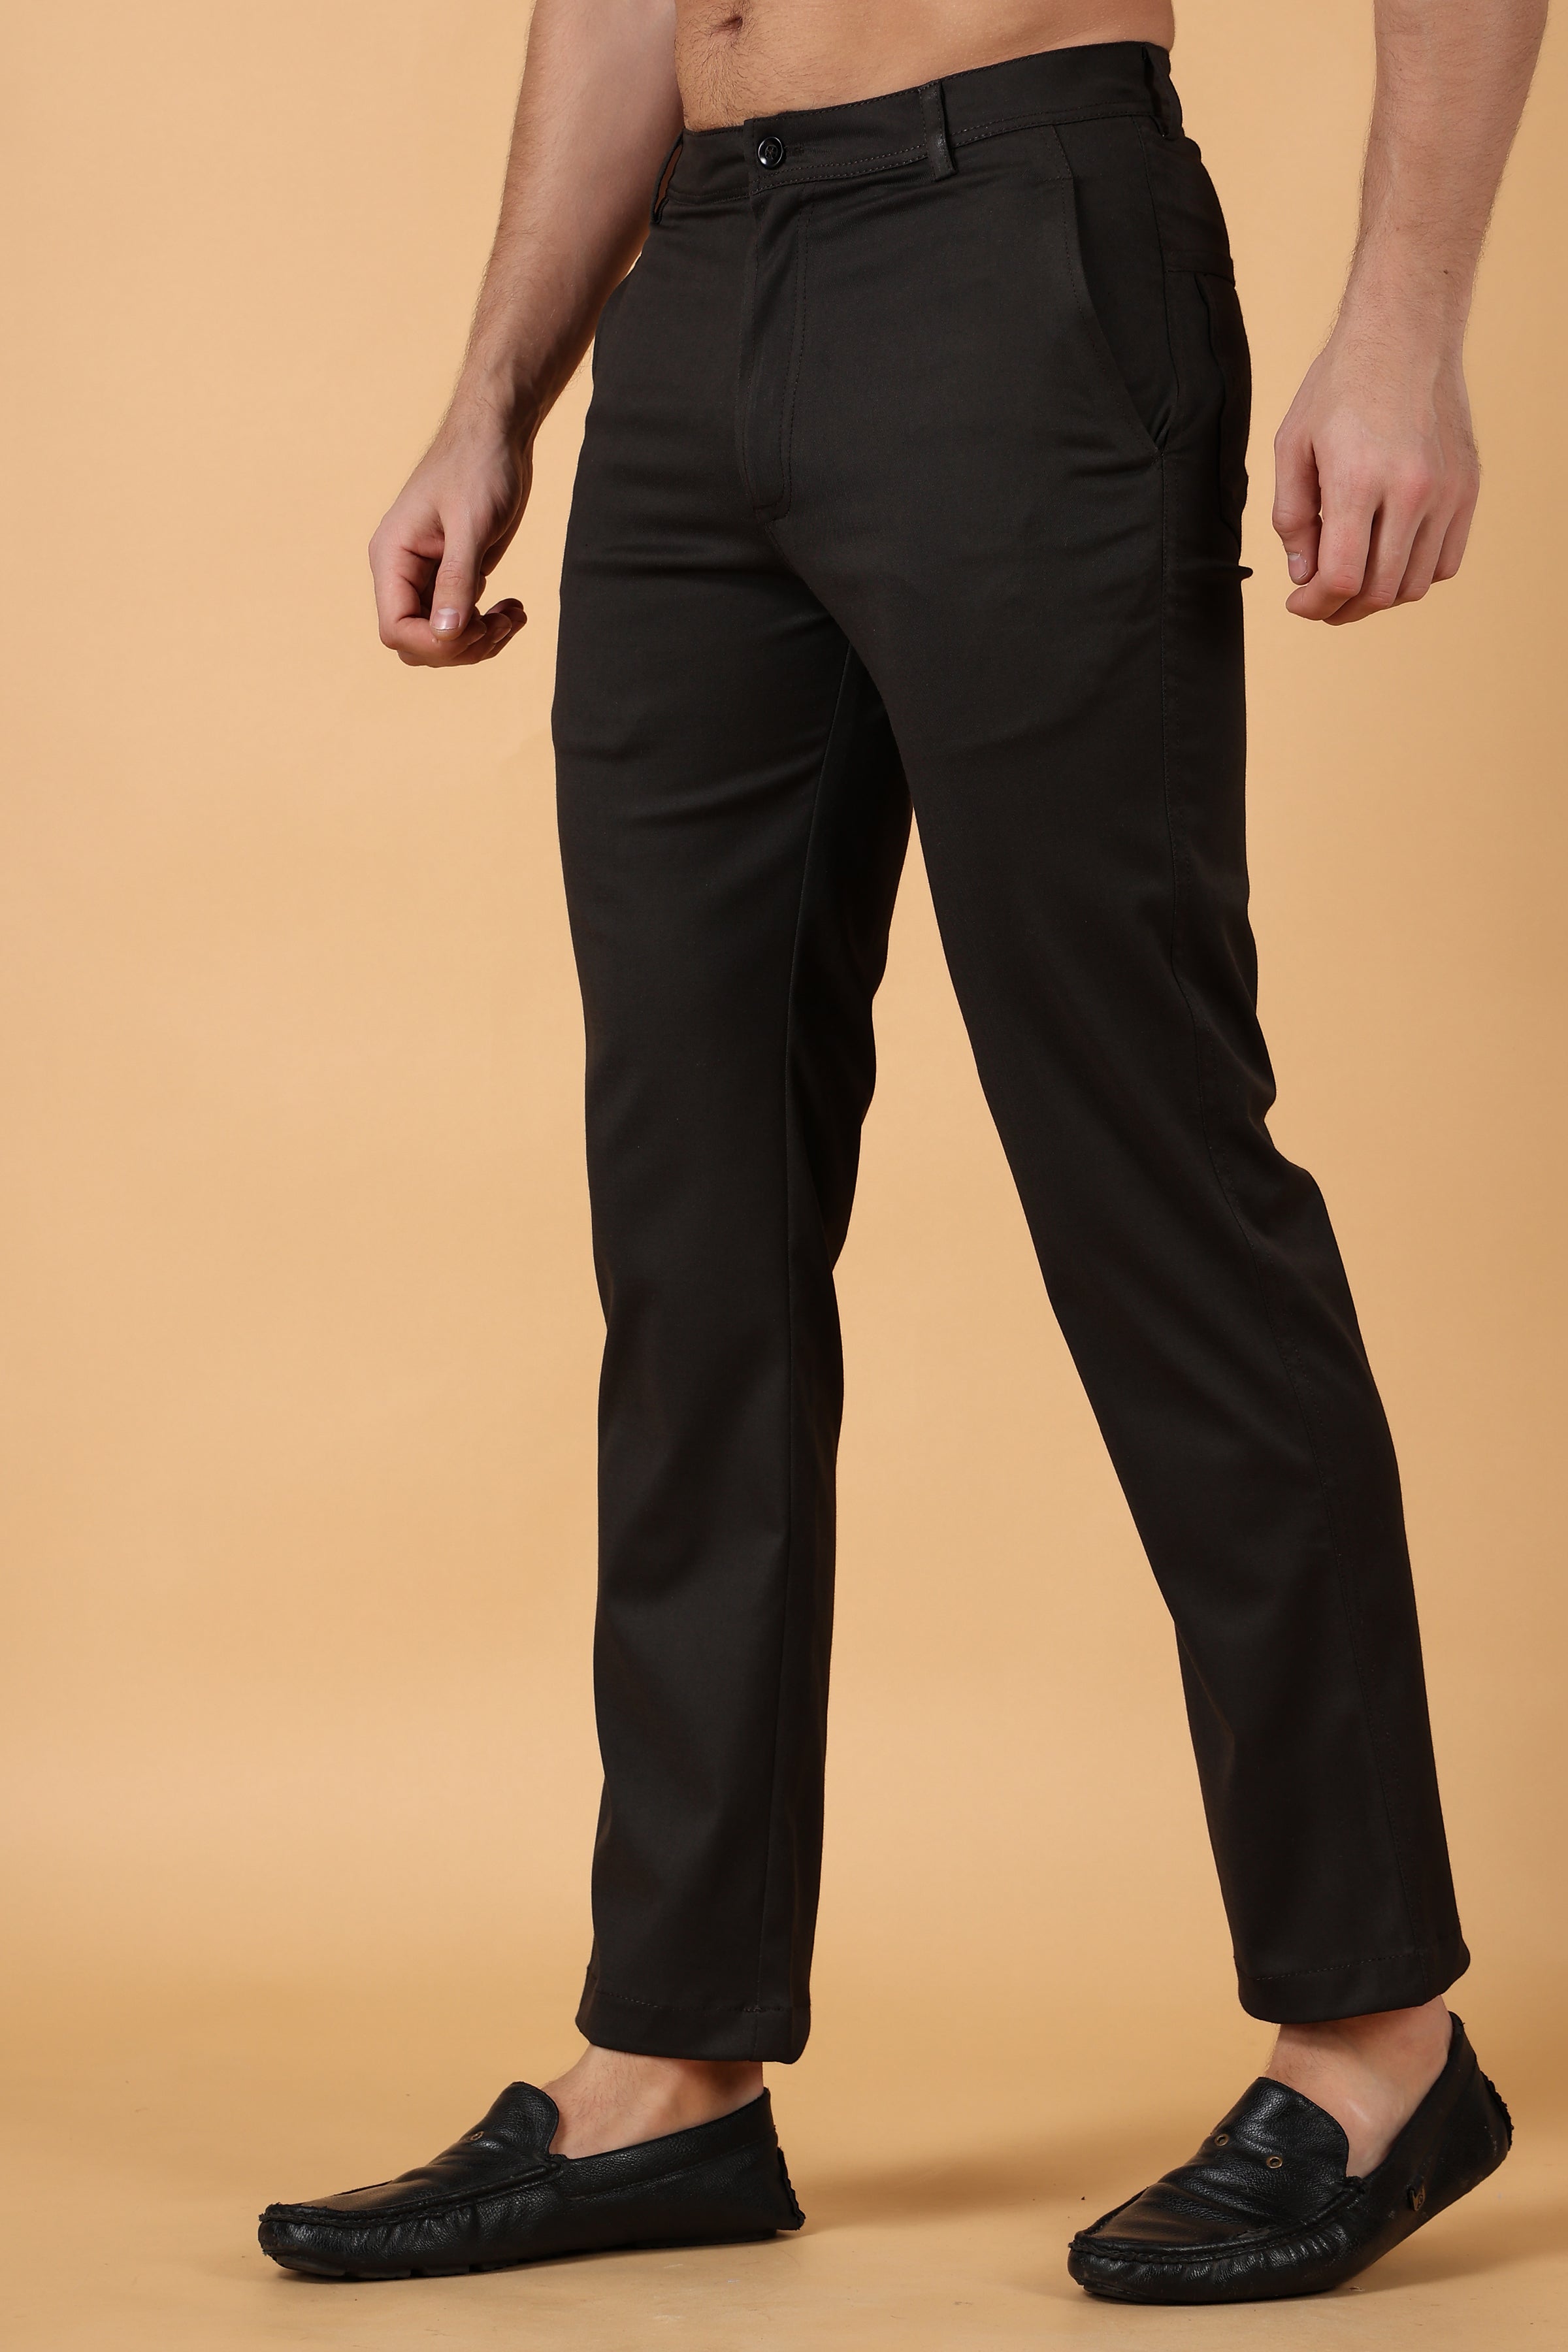 Men's Tailored Fit Plain Front Chino Pants | Lands' End